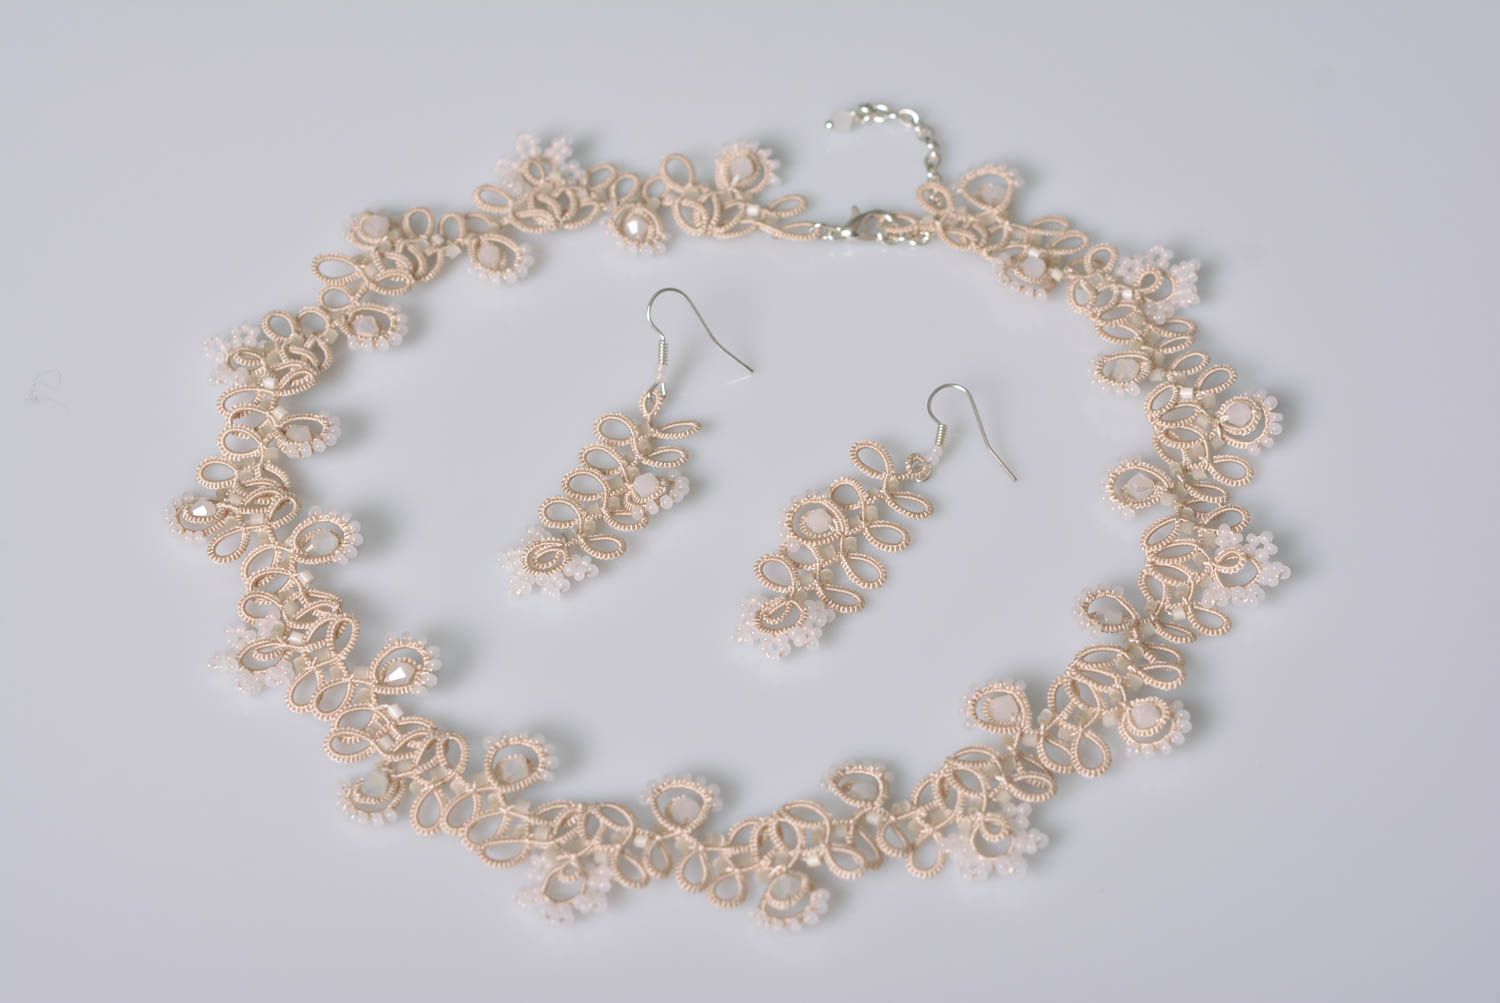 Handmade jewelry set designer necklace handmade earrings tatting lace gift ideas photo 1